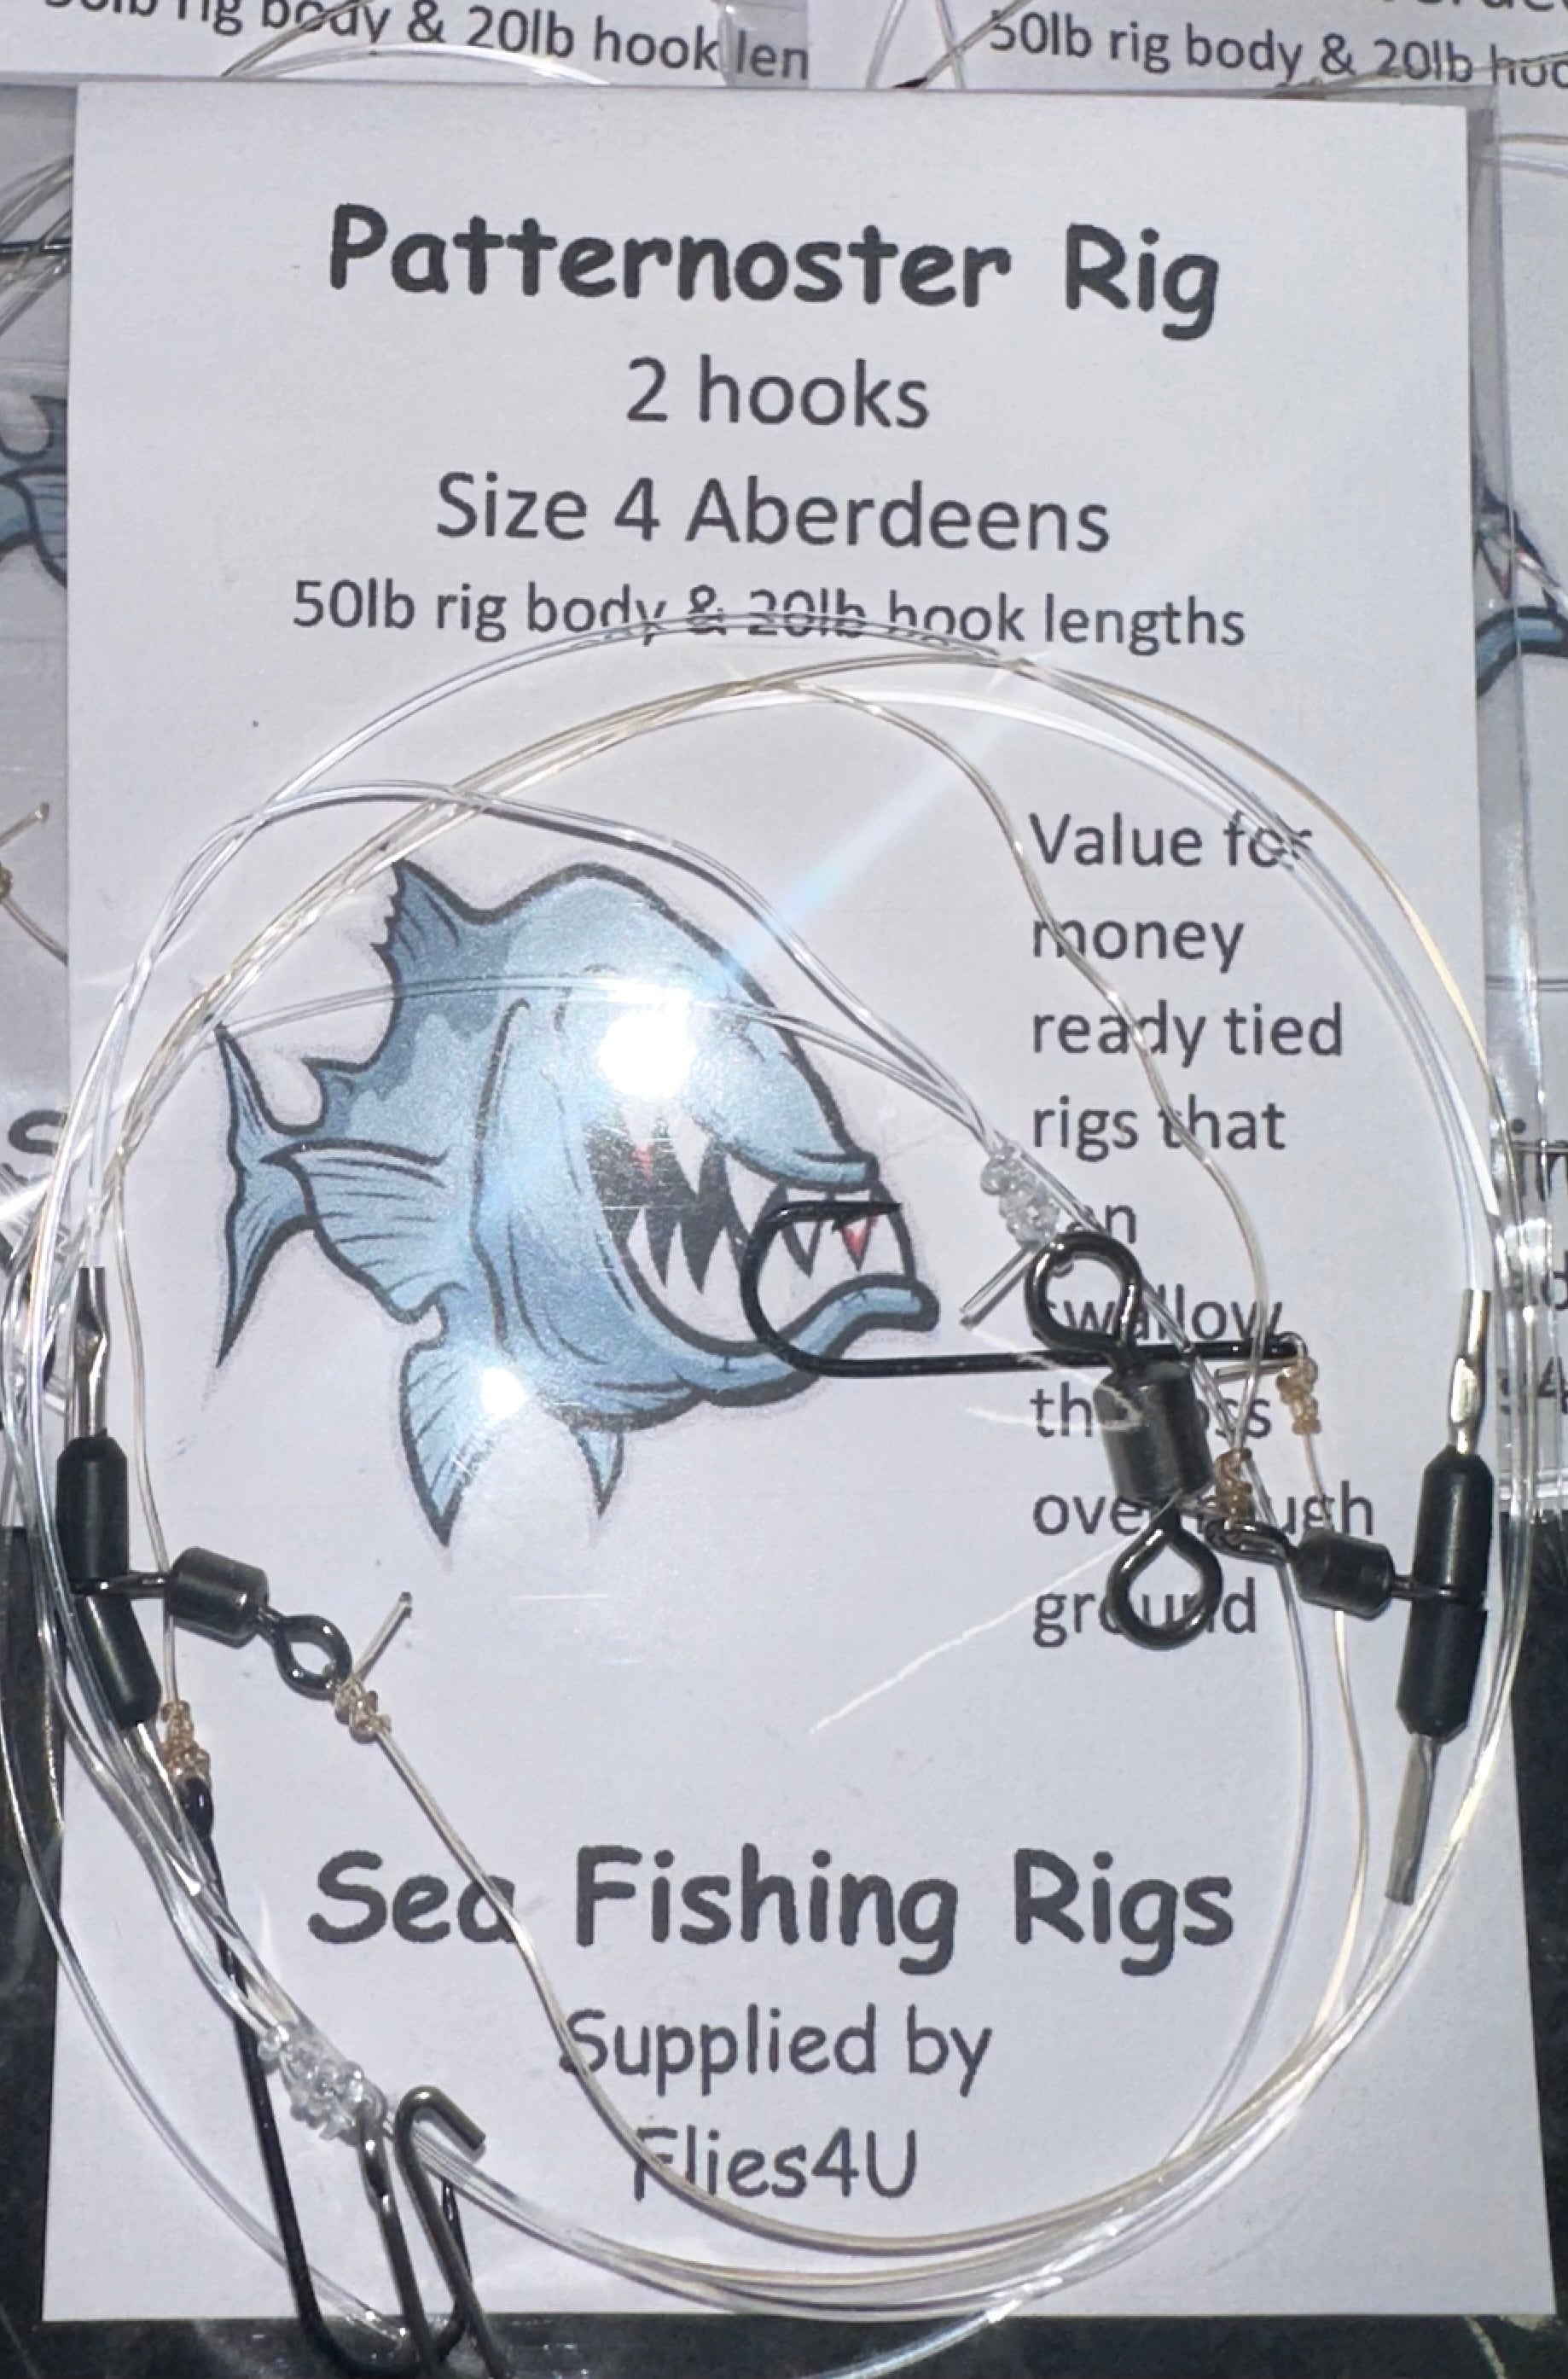 Sea fishing rigs, patternoster 2 hook, packs of 10s, flat fish, whitin –  Flies4U